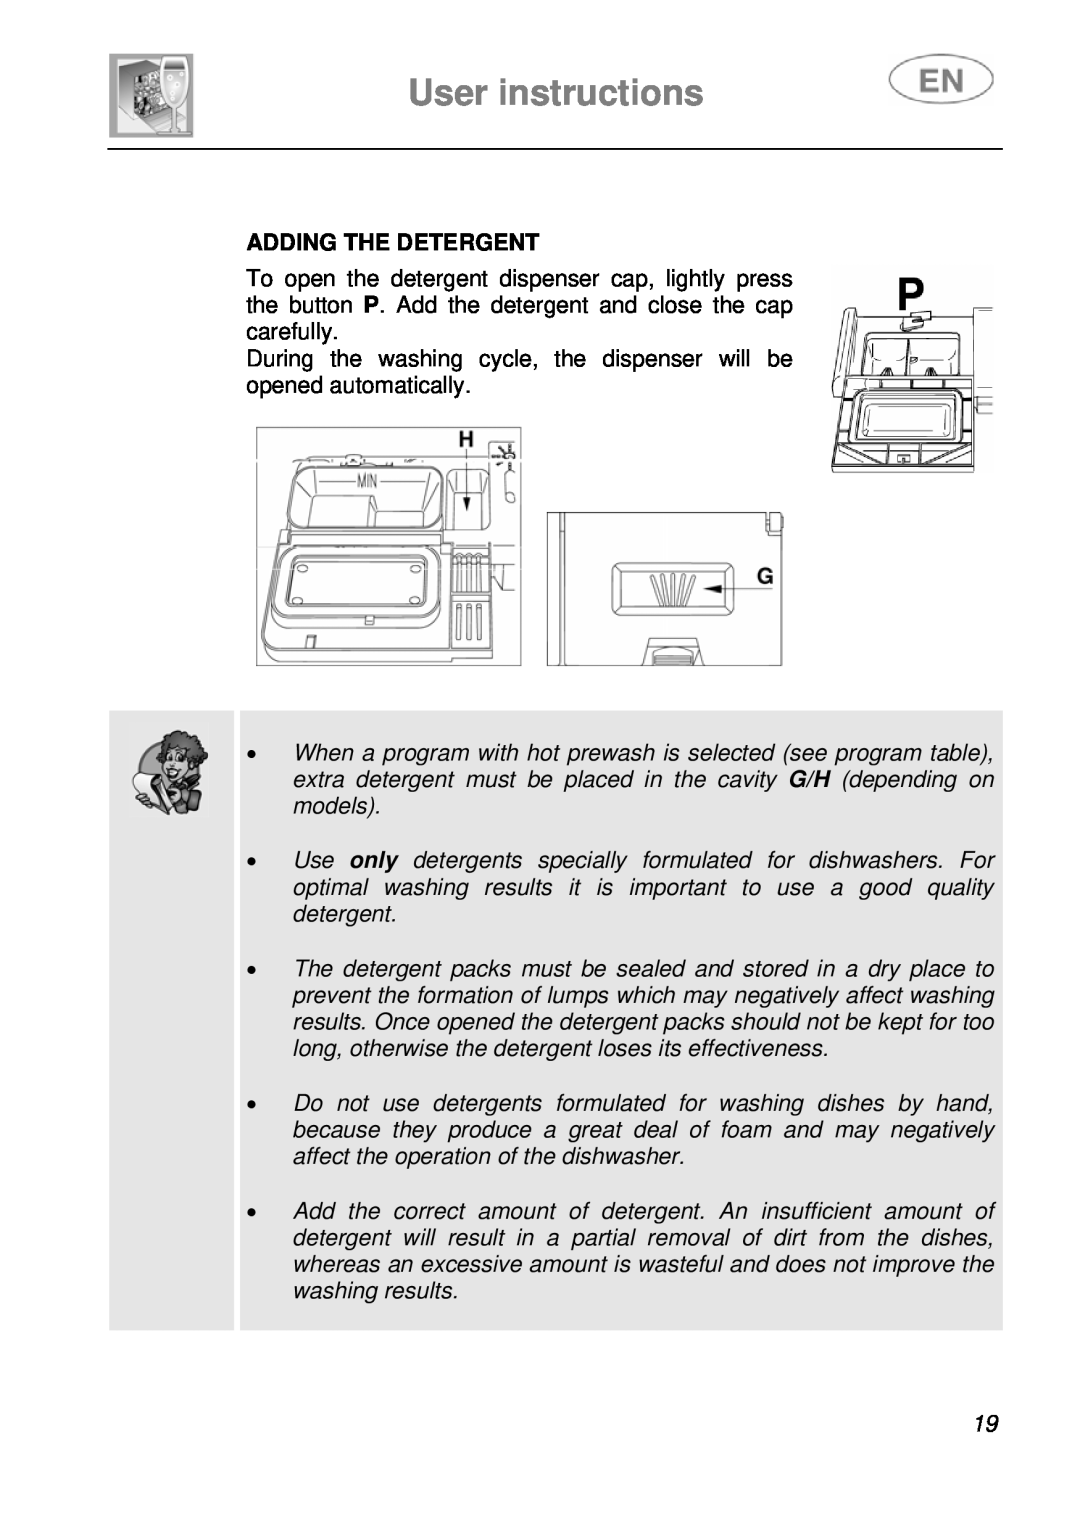 Smeg ST115S instruction manual User instructions, Adding The Detergent 